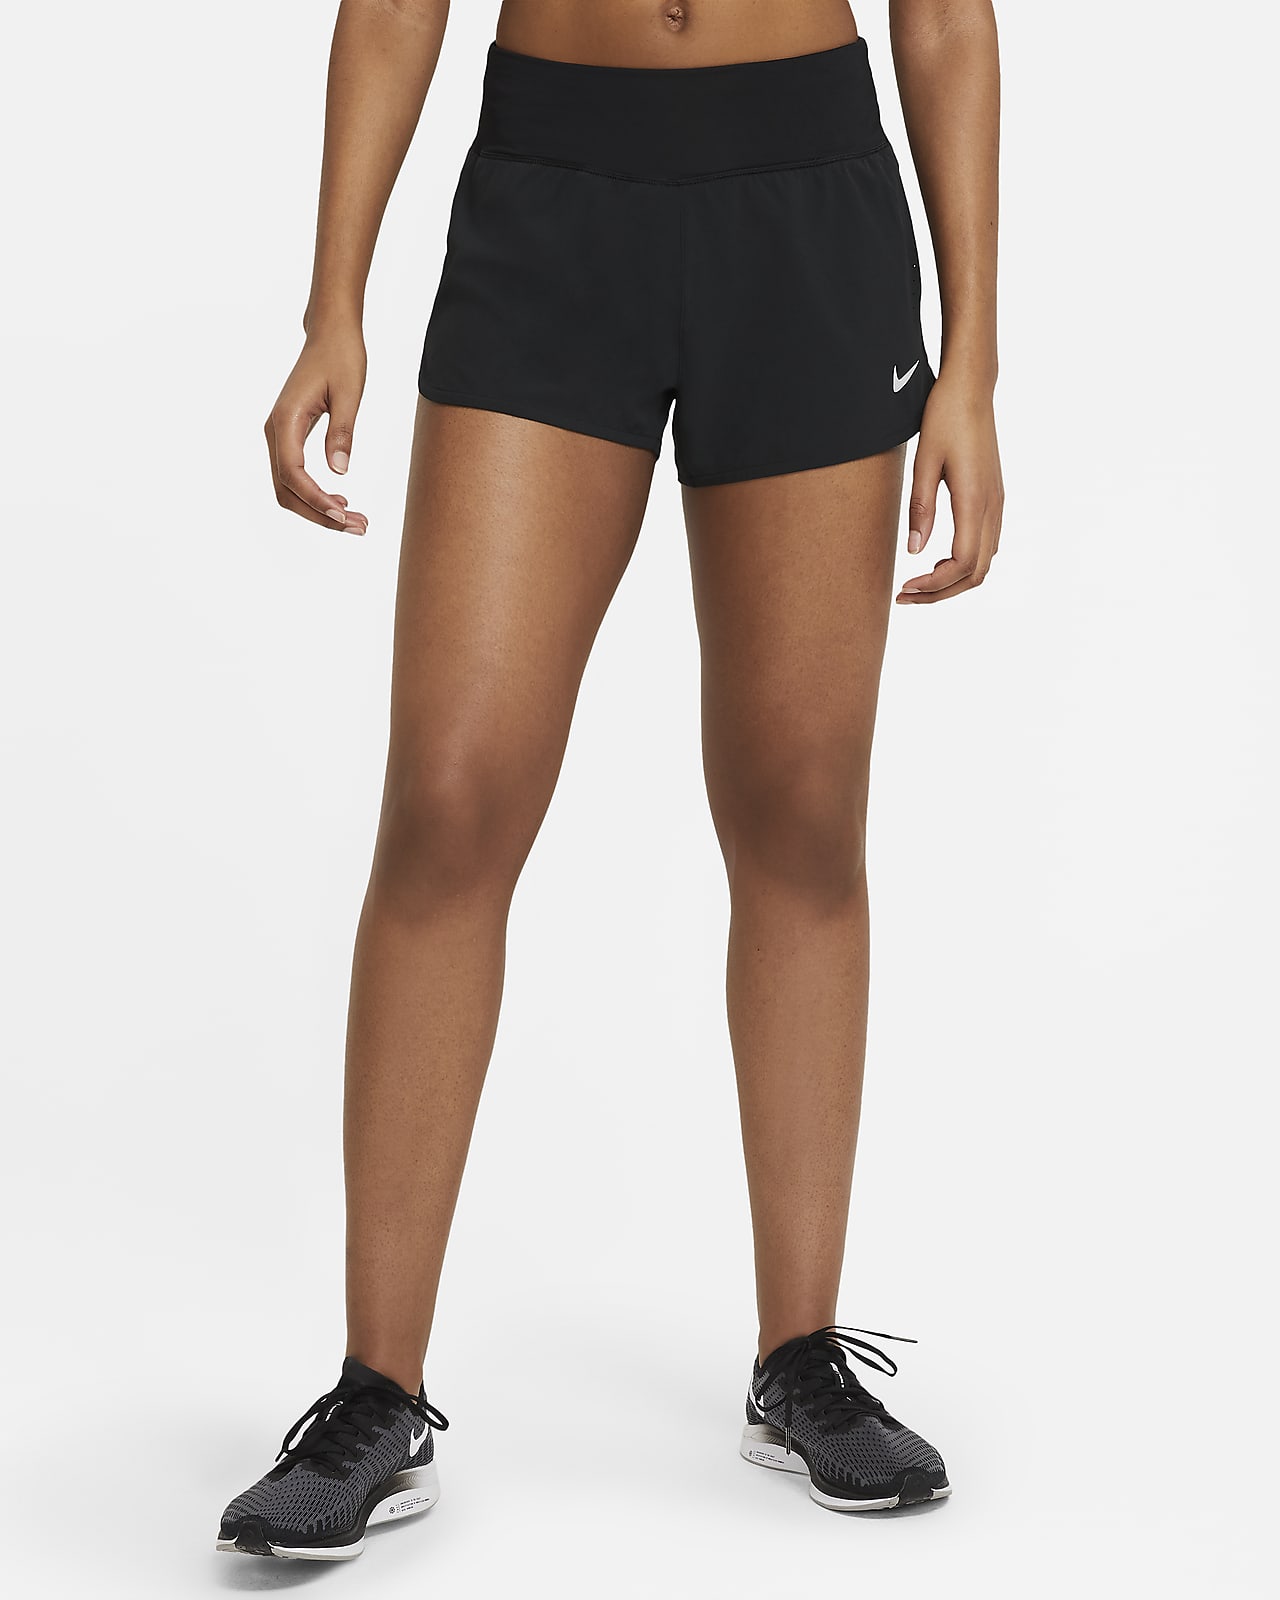 Nike Eclipse Women's Running Shorts